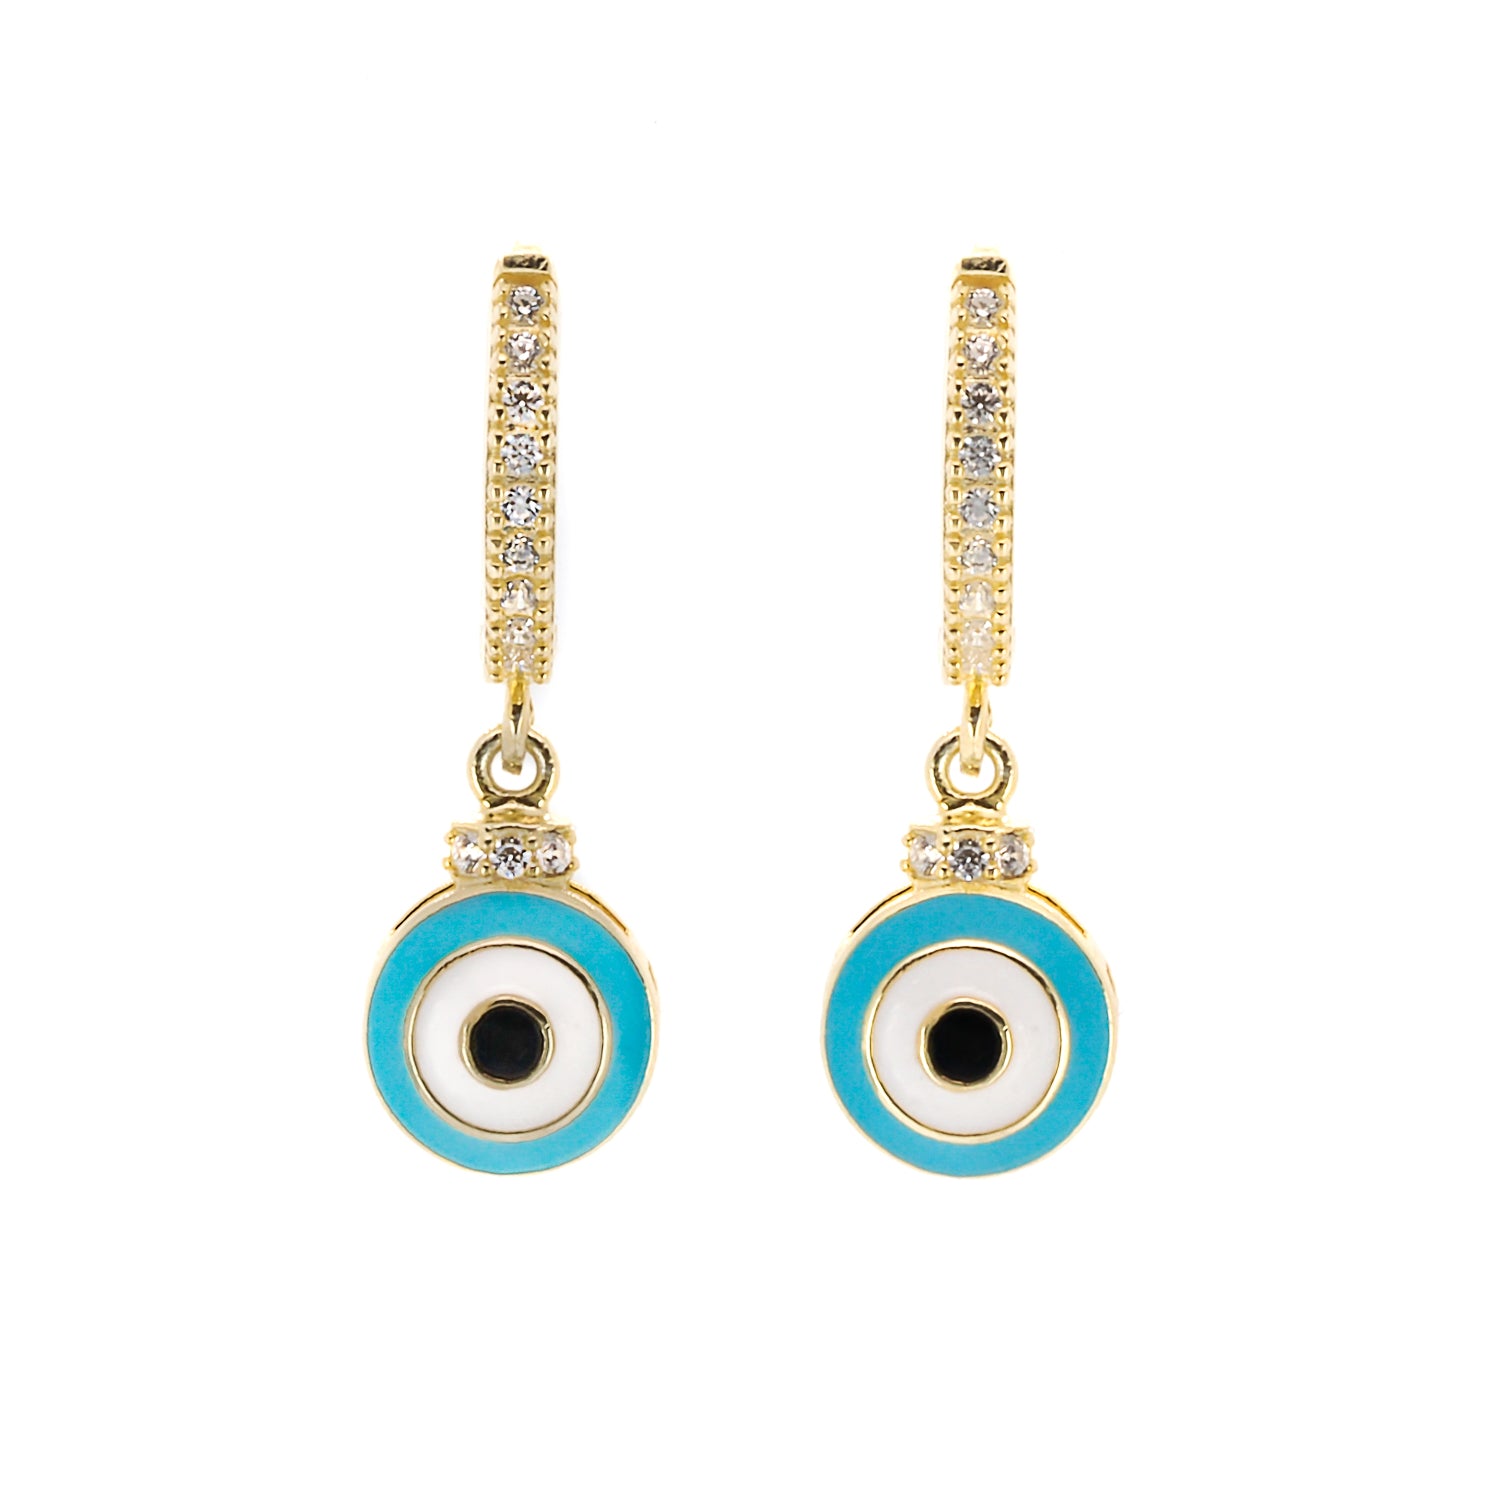 Turquoise Evil Eye Gold Earrings with zircon stones and enamel charm